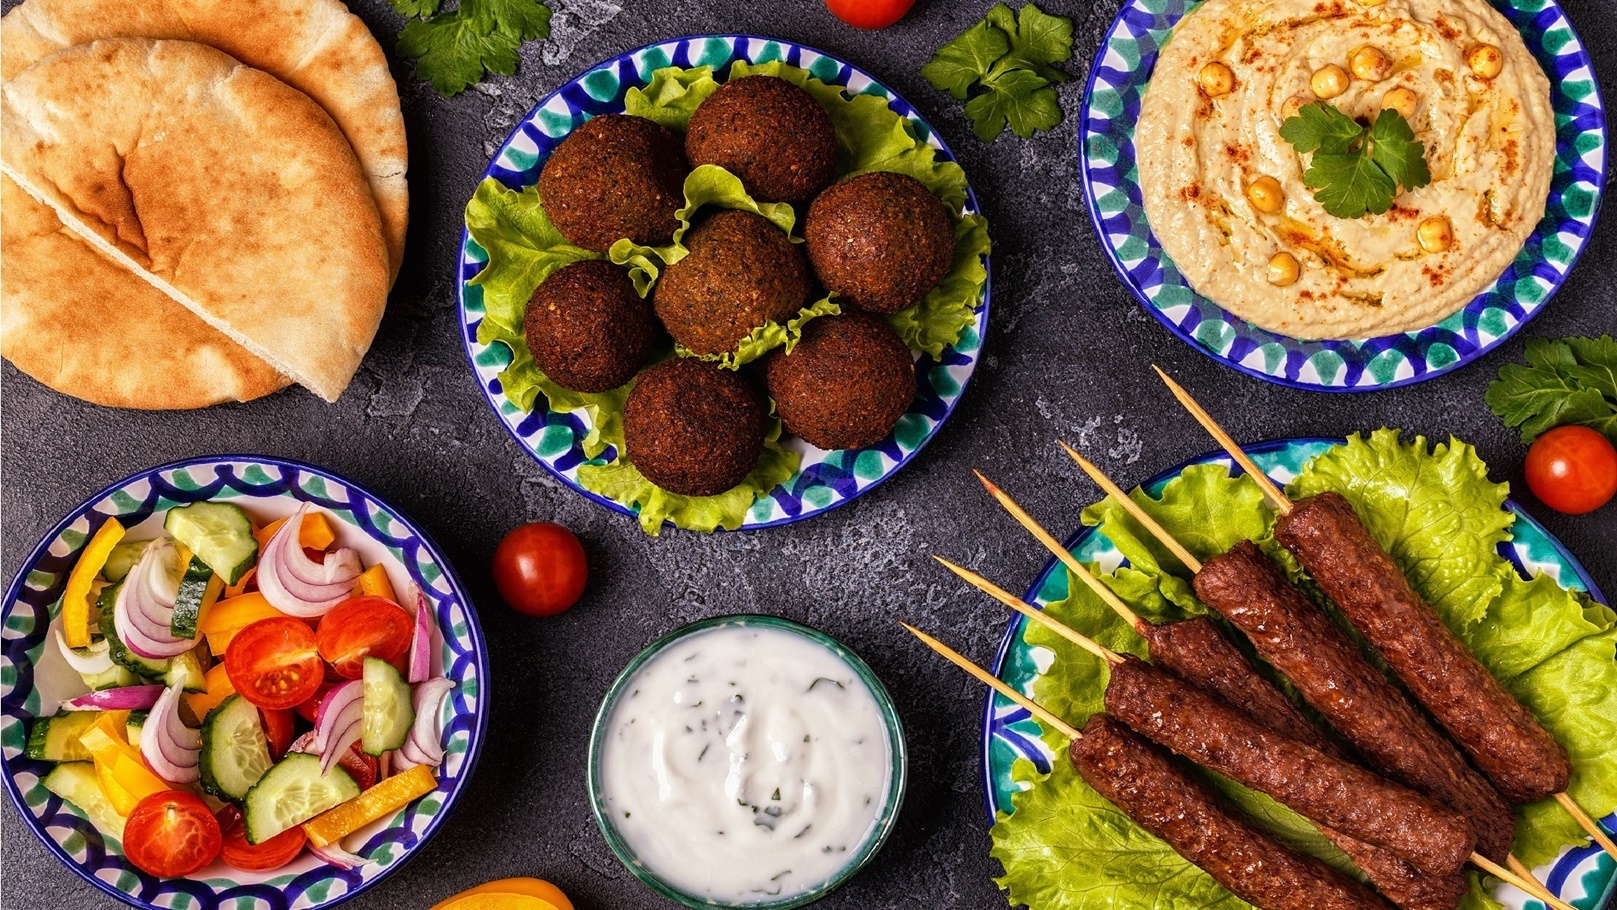 classic-kebabs-falafel-and-hummus-on-the-plates-2021-08-31-15-08-59-utc